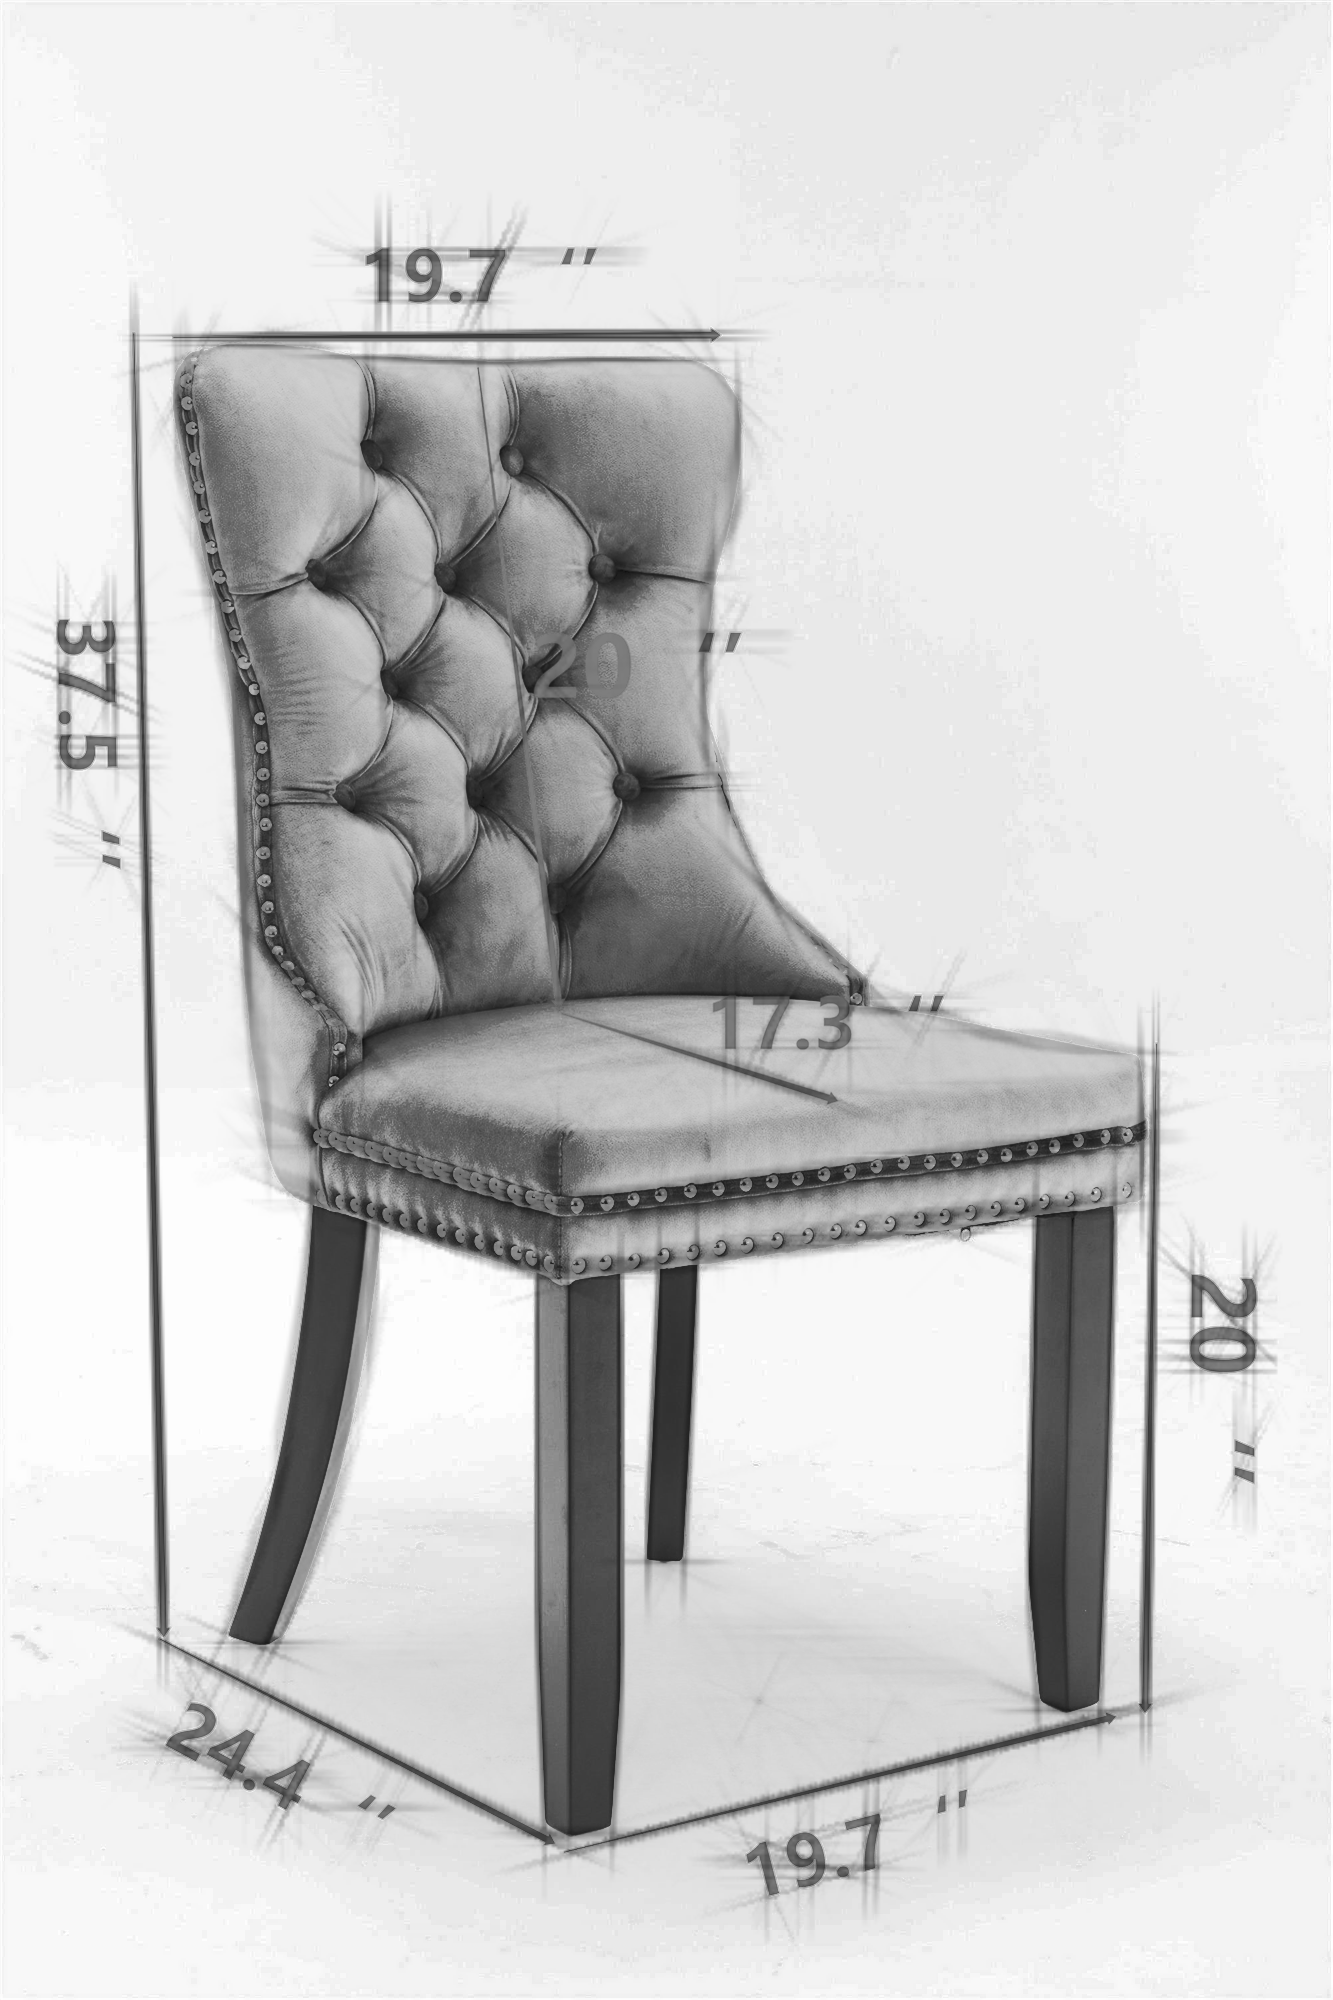 nikki collection modern high-end tufted dining chairs 2-pcs set, black+orange